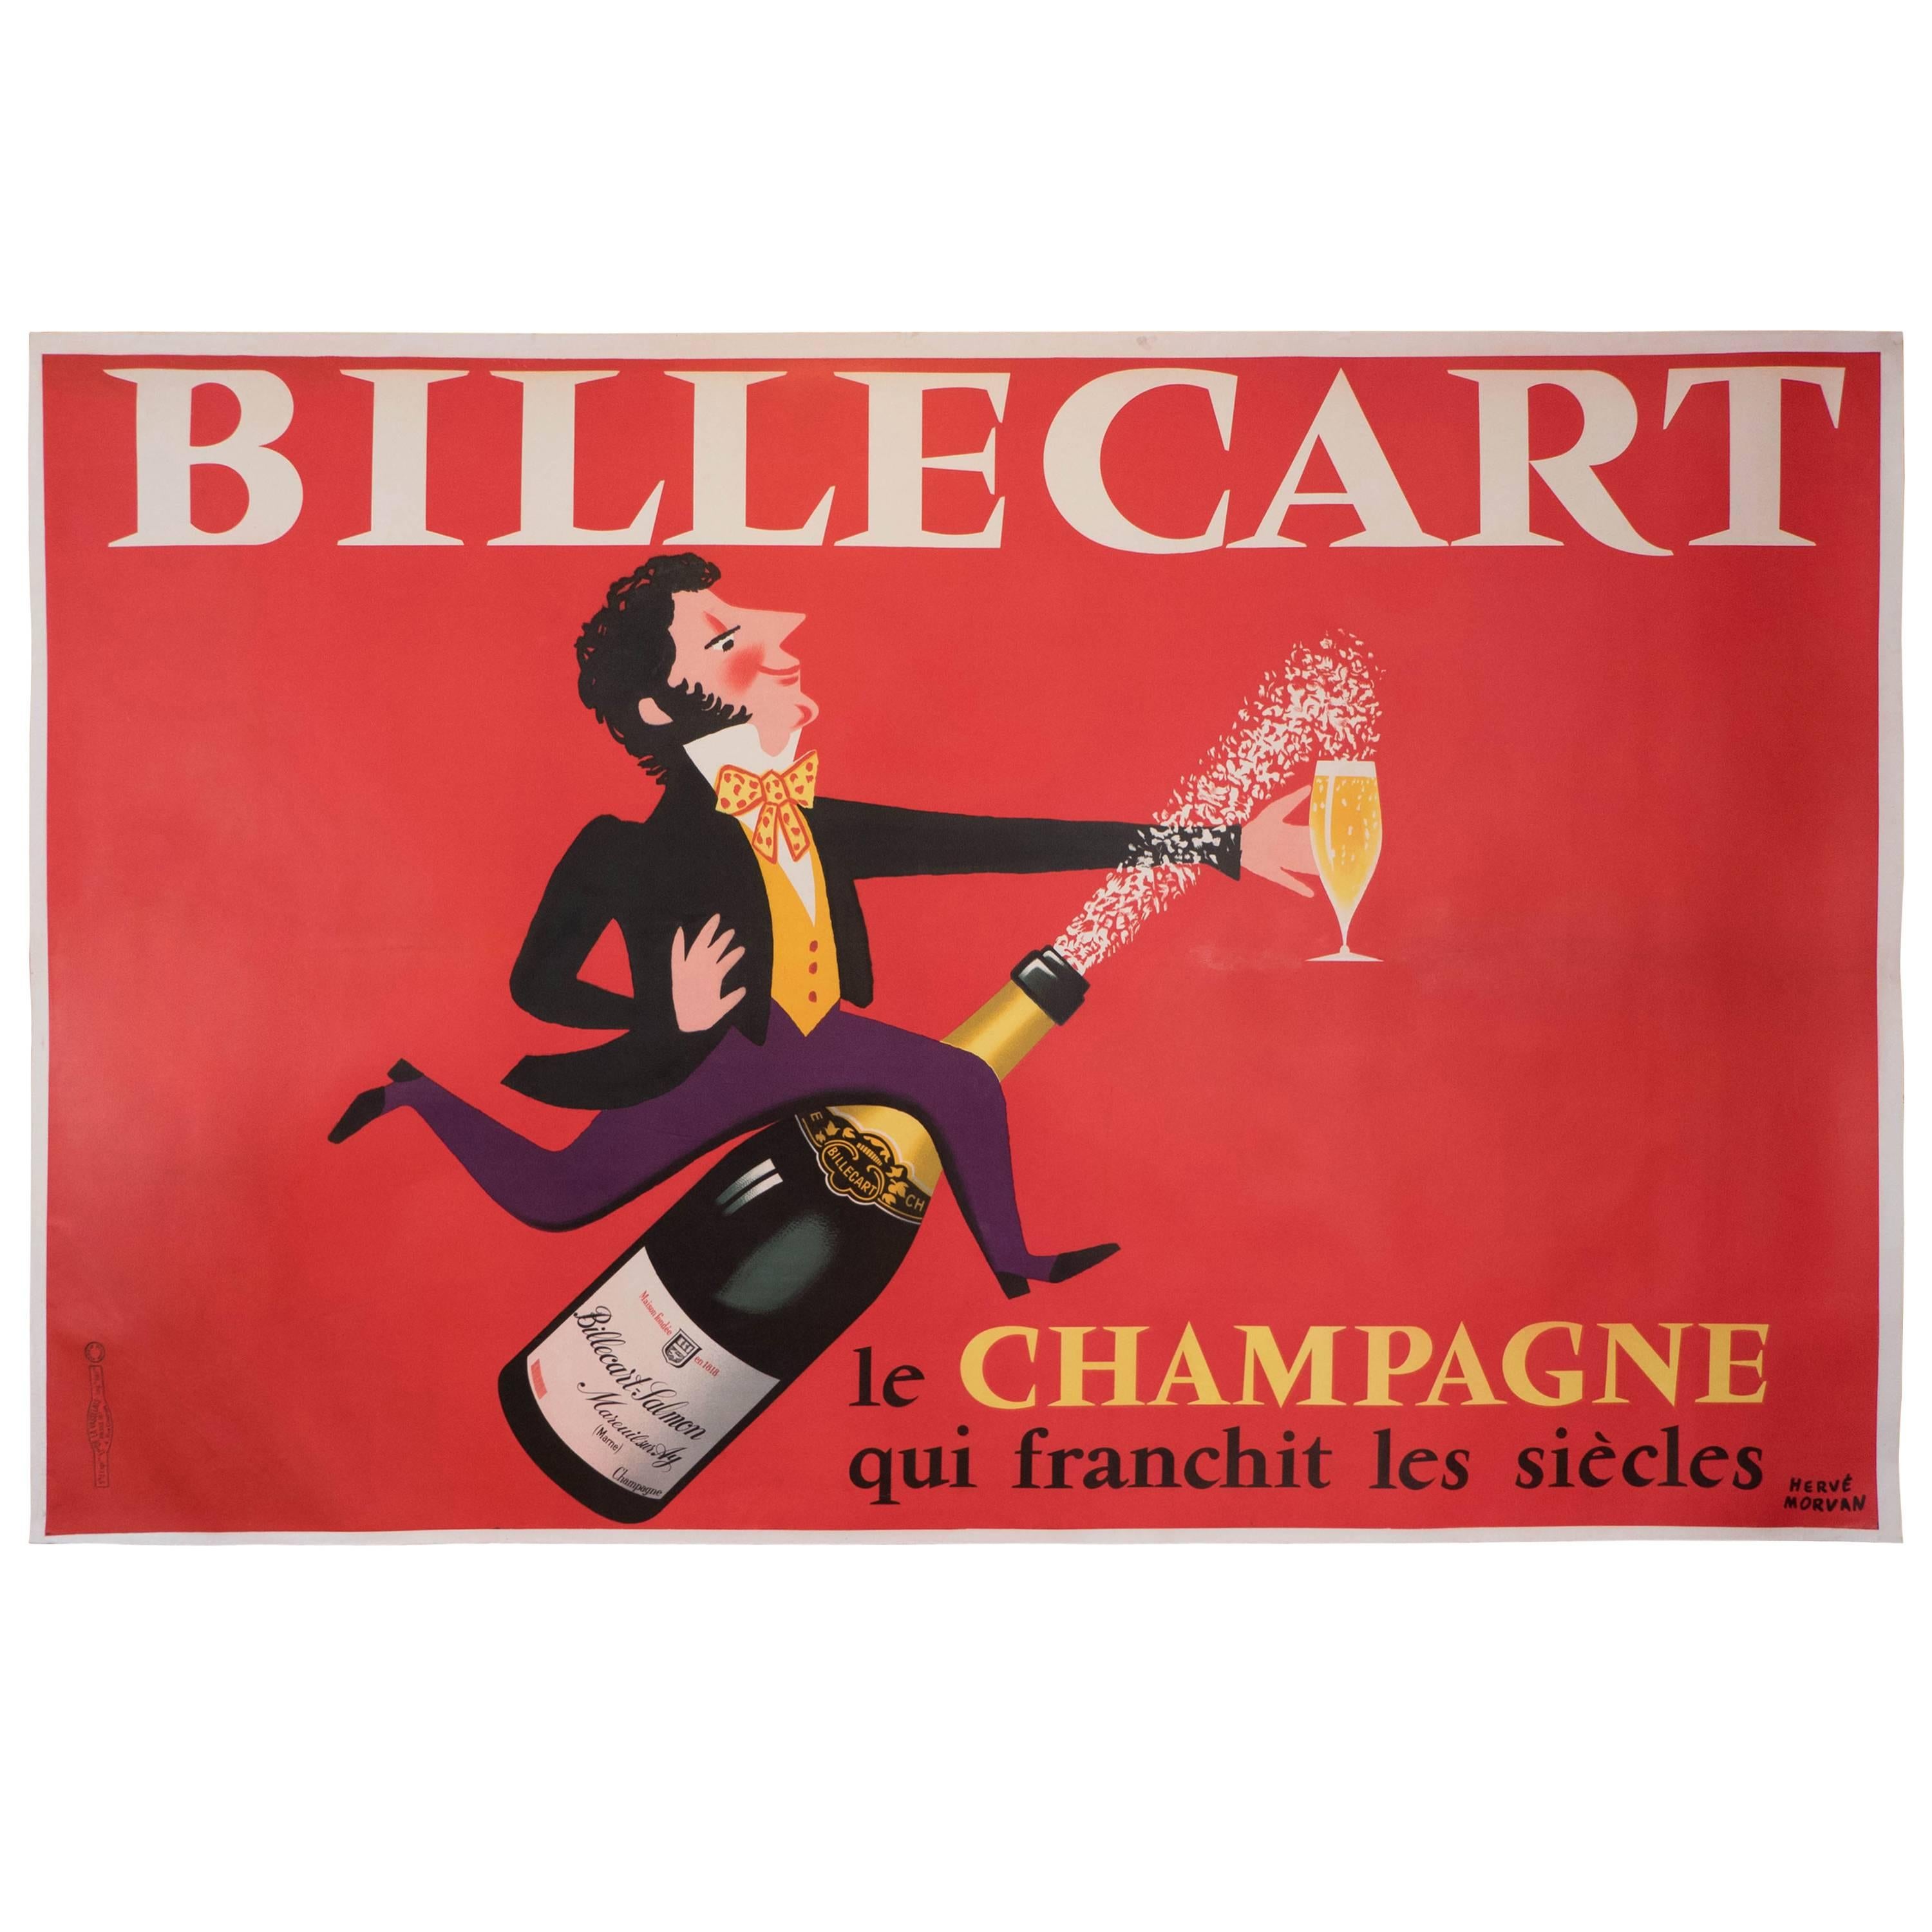 Rare Hervé Morvan Lithograph 'Billecart Le champagne qui Franchit les siècles'